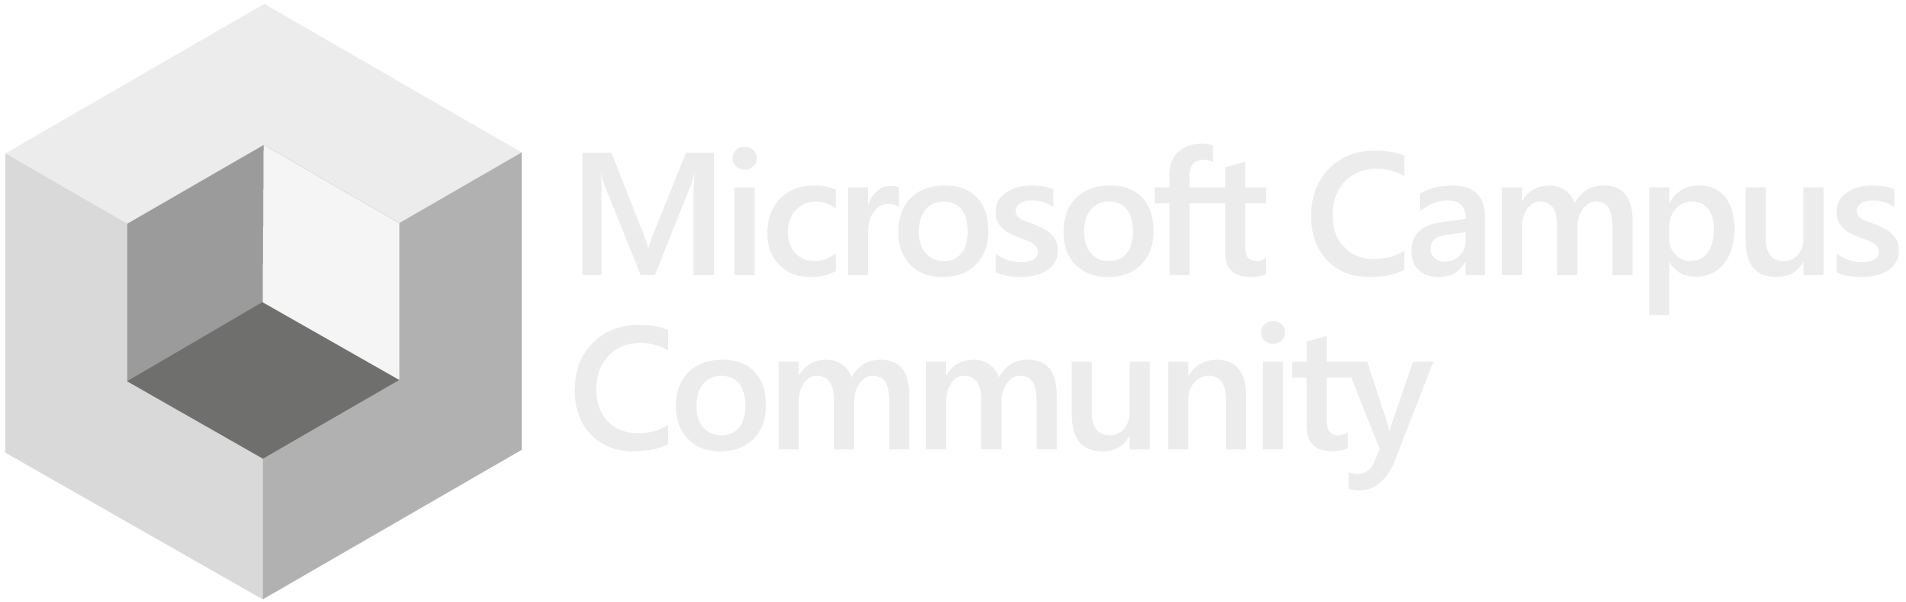 Microsoft Campus Community